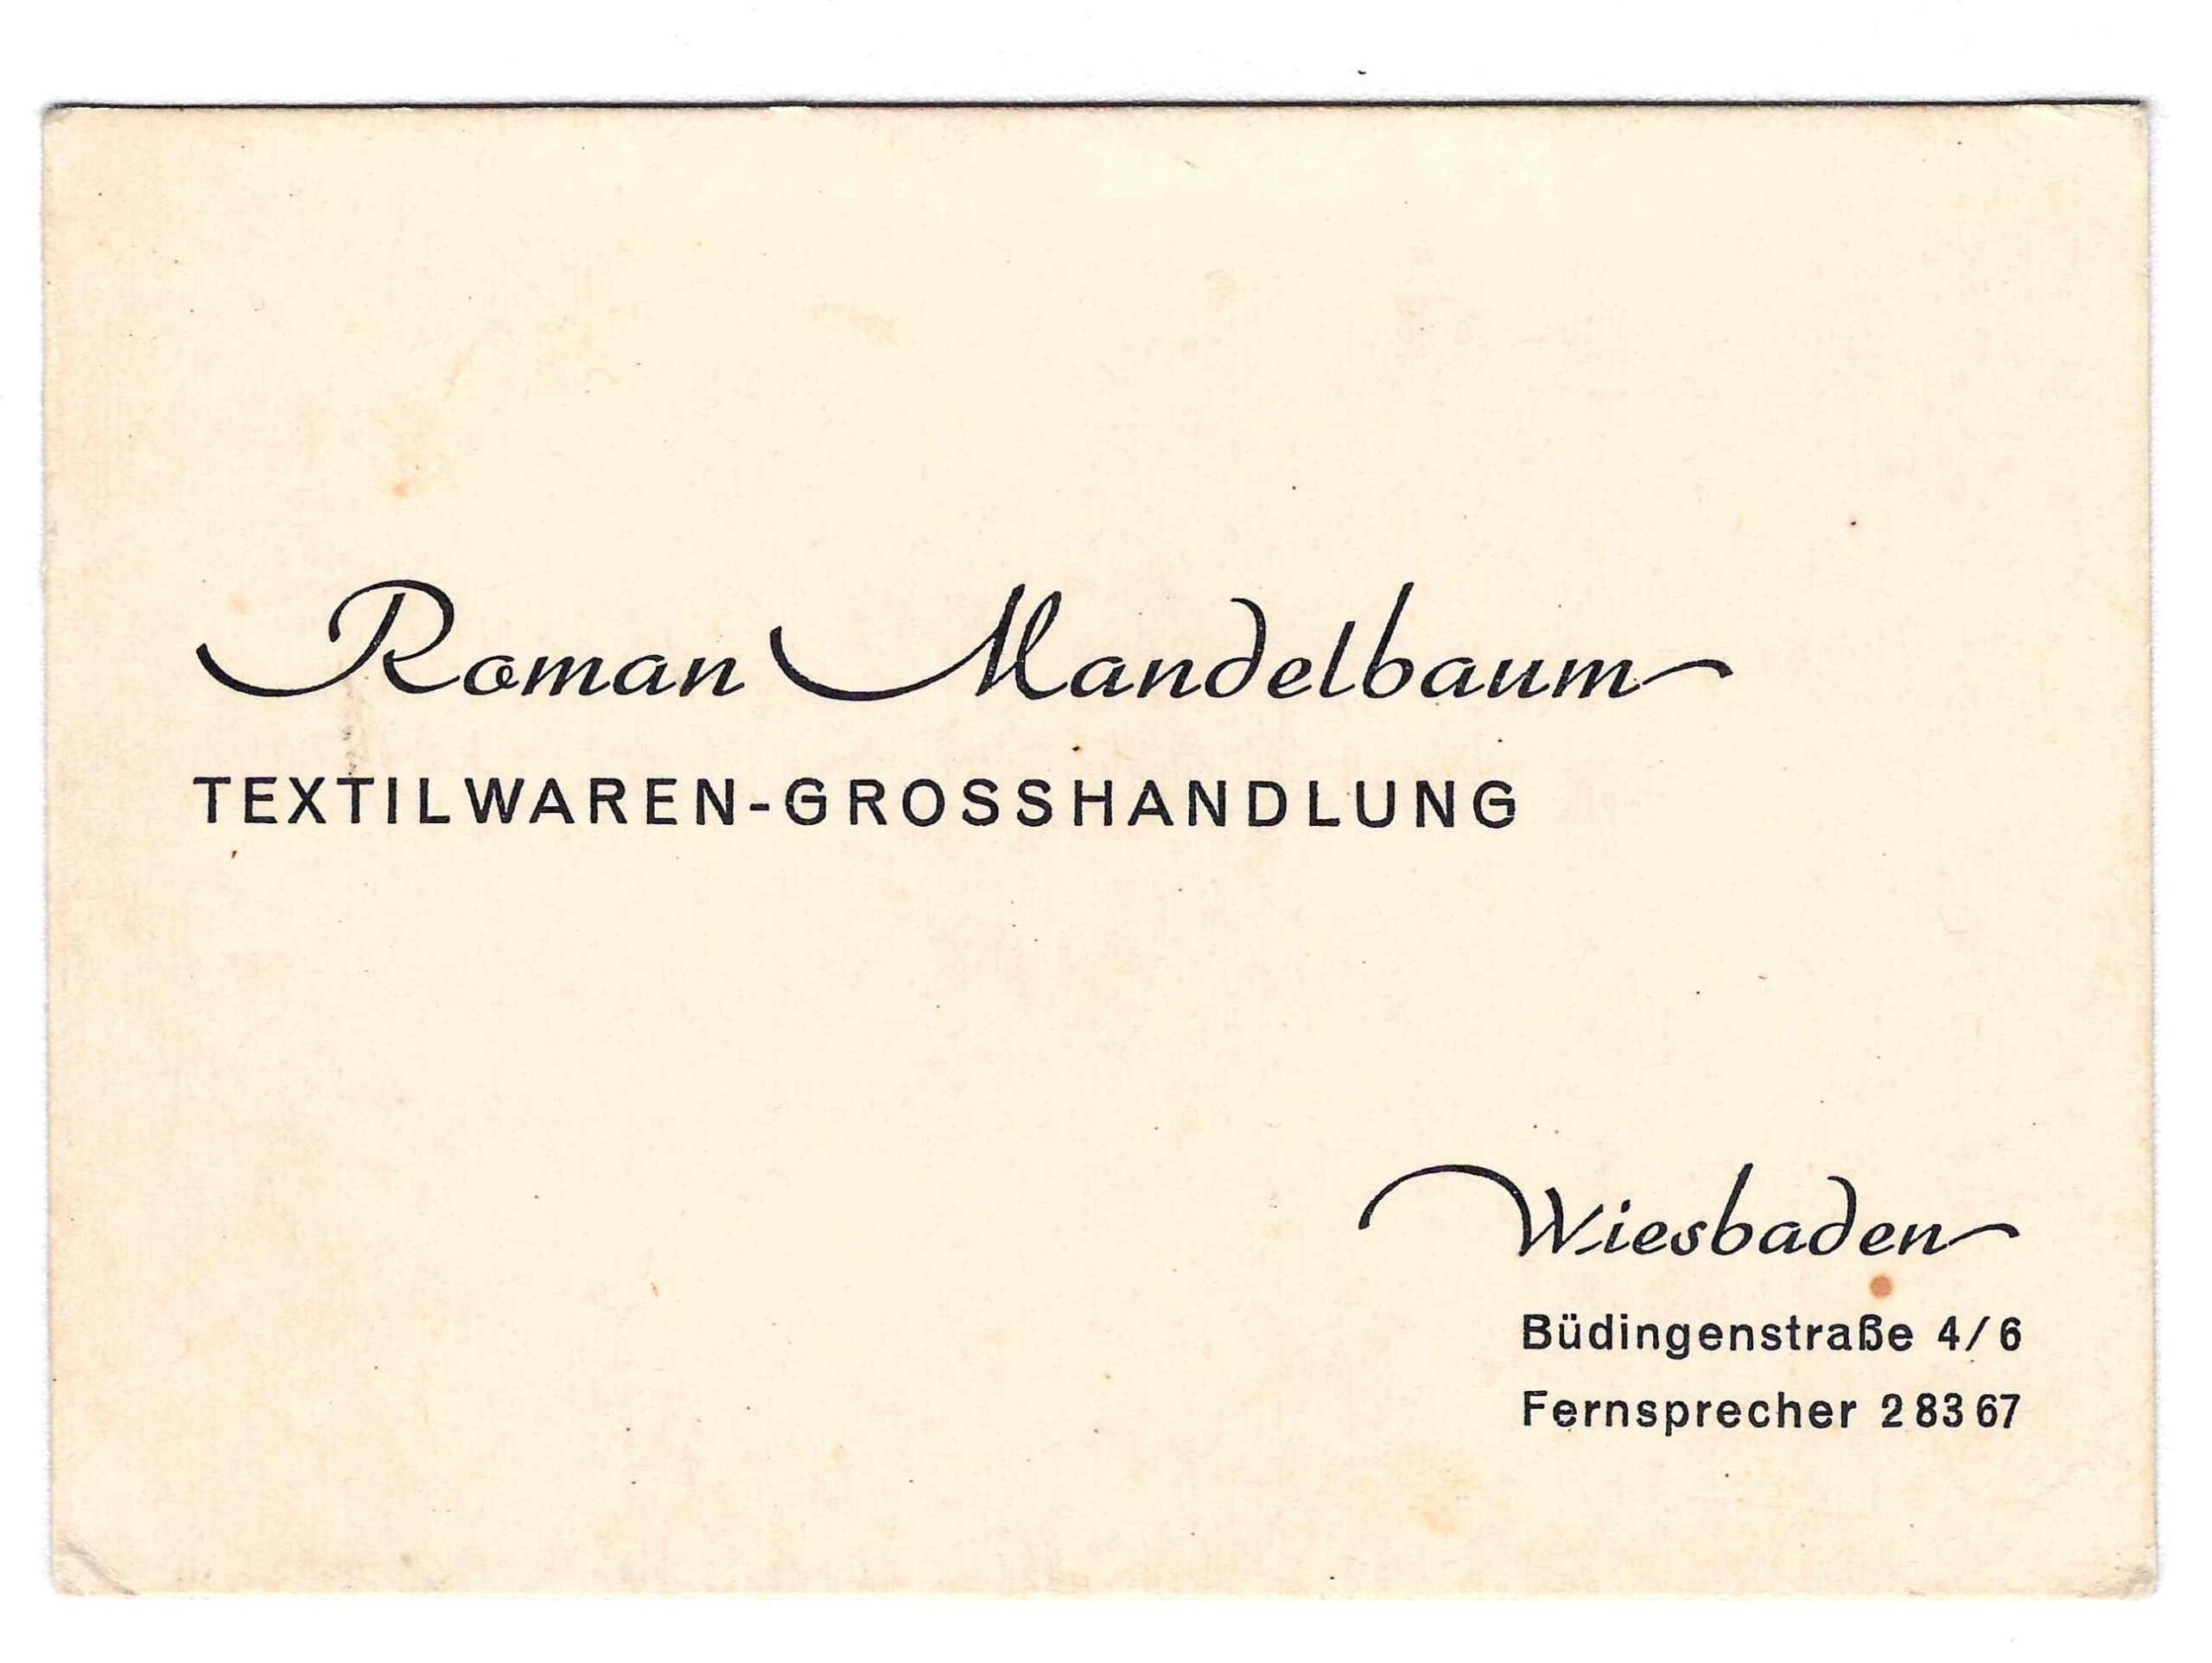 Business card R. Mandelbaum. Collection Samuel Mandelbaum